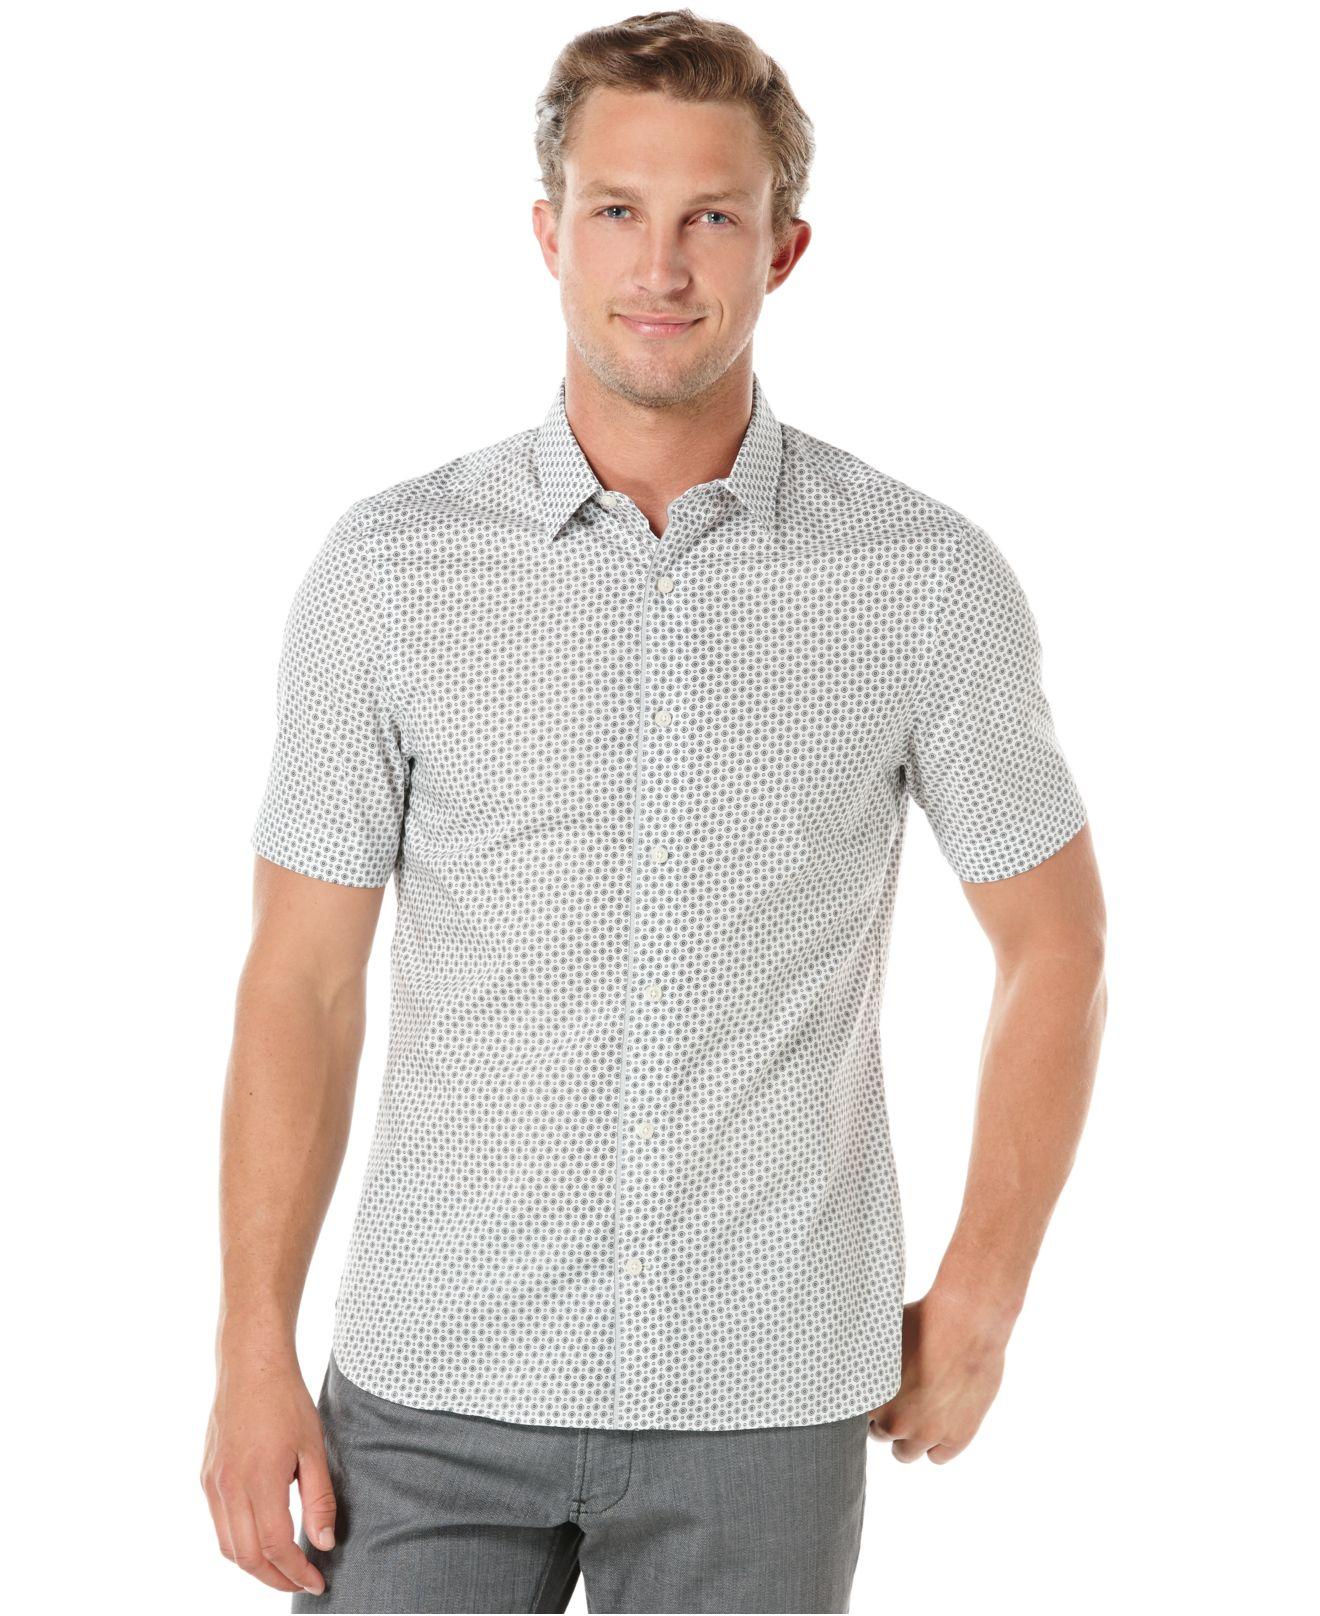 Lyst - Perry Ellis Small-print Slim-fit Shirt in Gray for Men